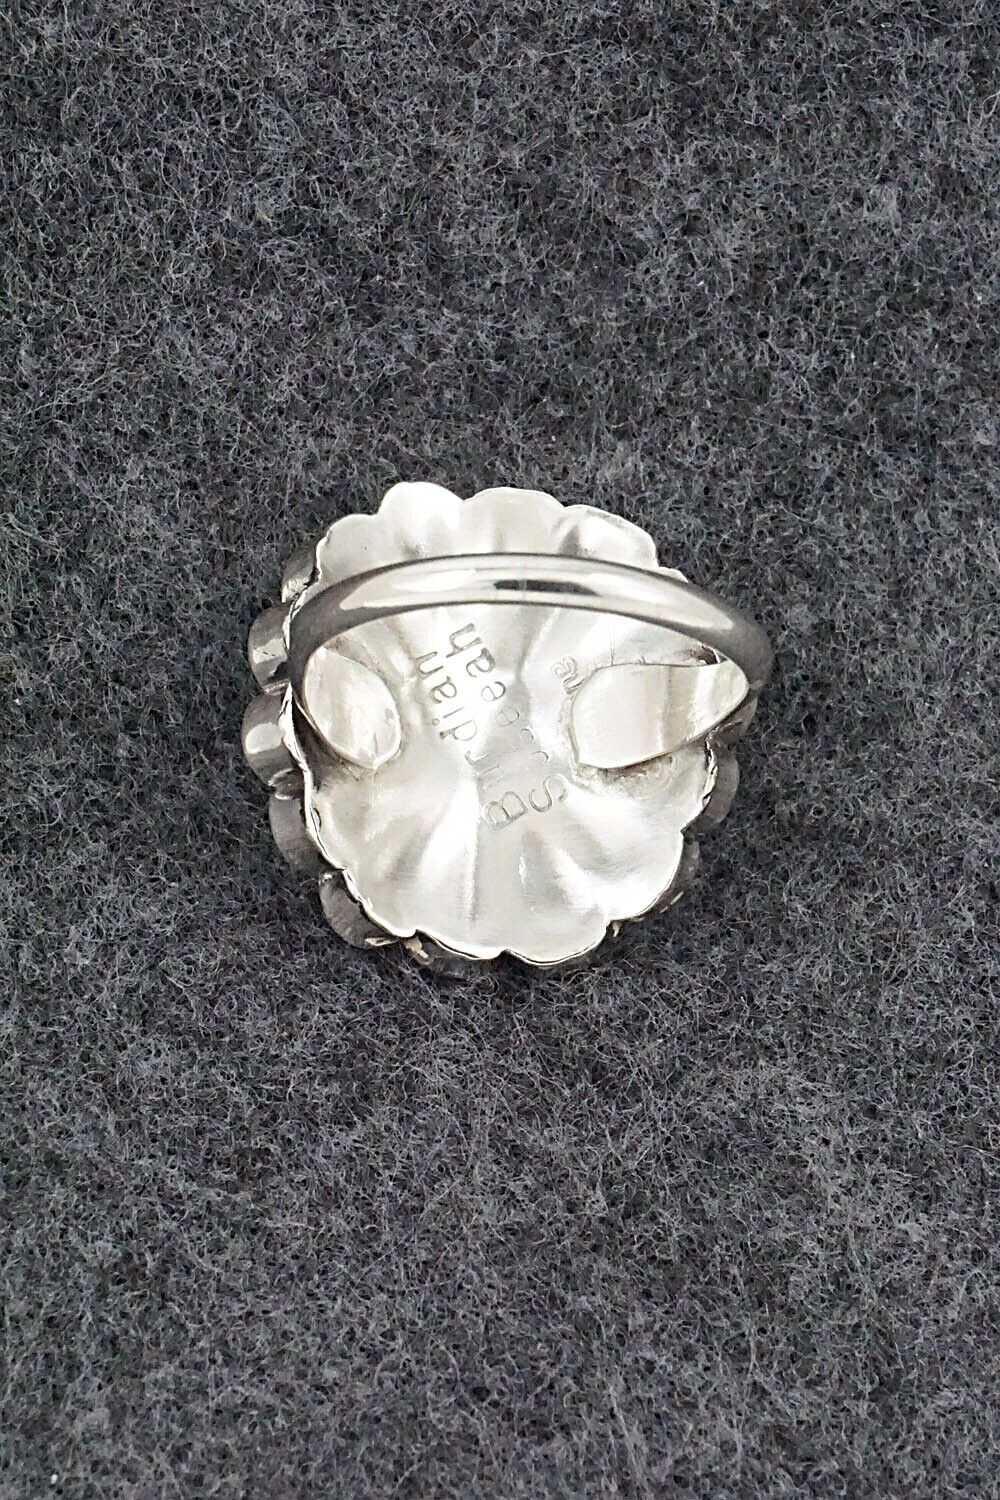 Multi-Stone & Sterling Silver Ring - Burdian Soseeah - Size 8